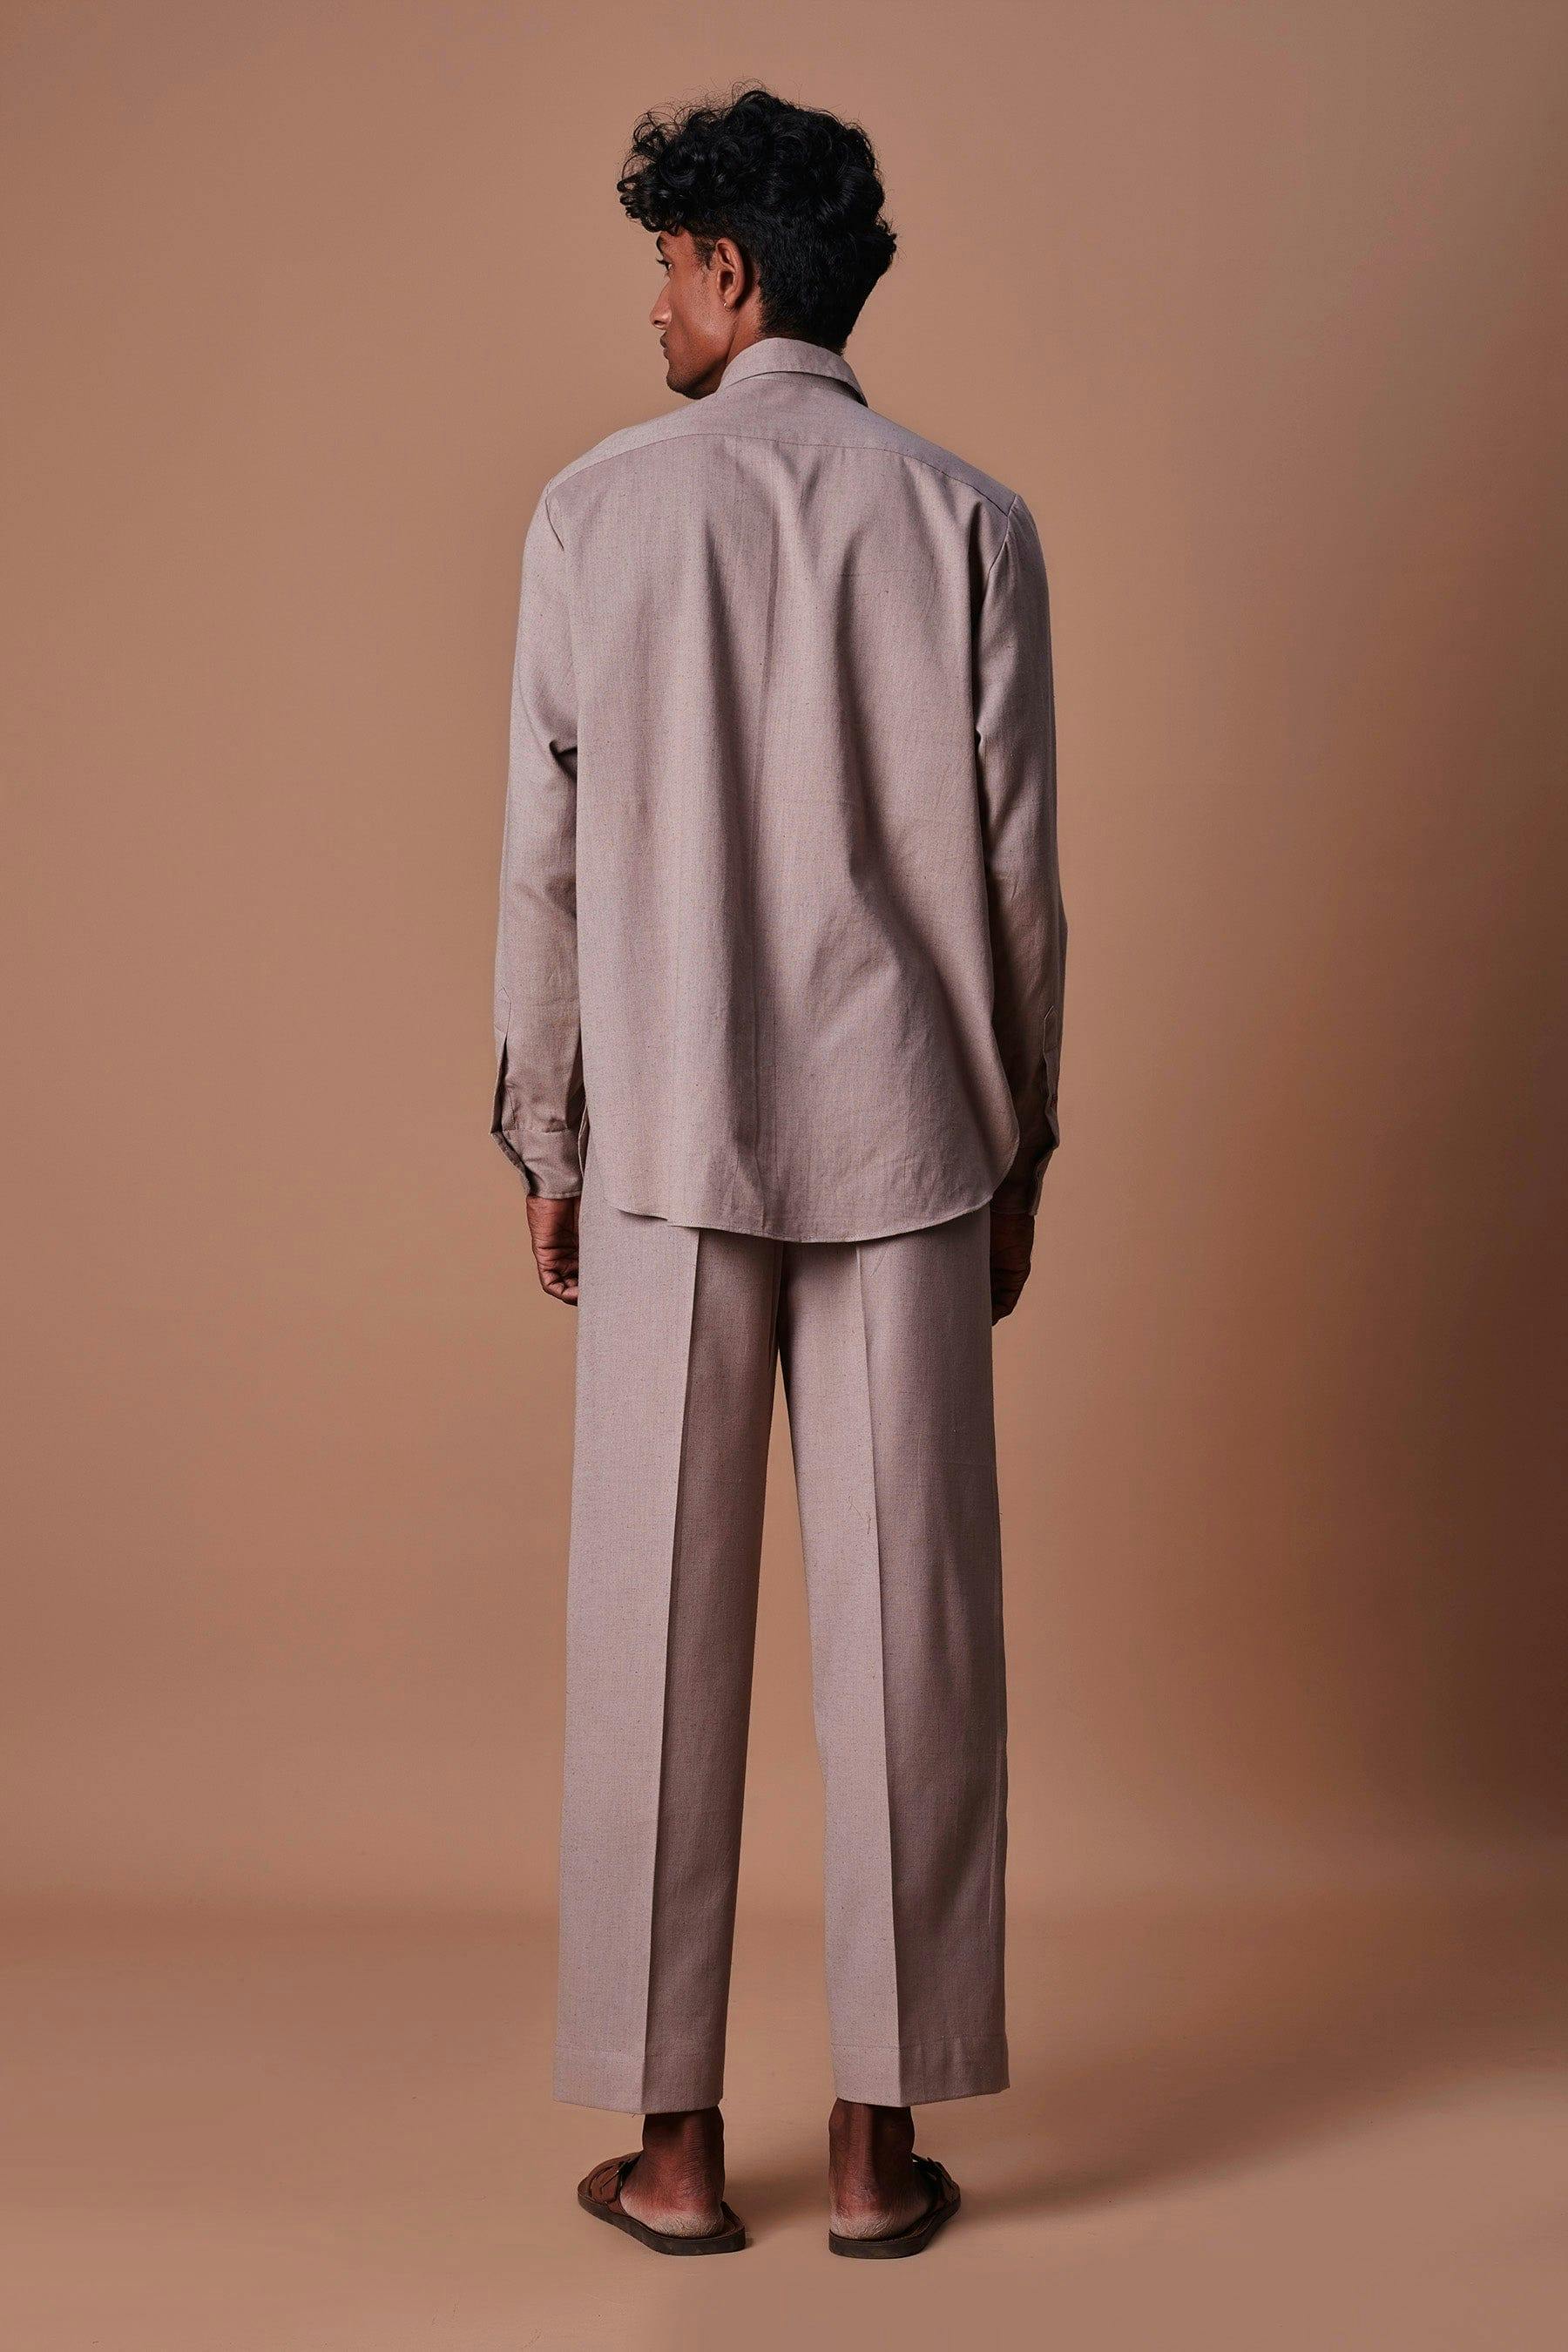 Mati Grey Placket Shirt & Ankle Pant Set (2 PCS), a product by Style Mati